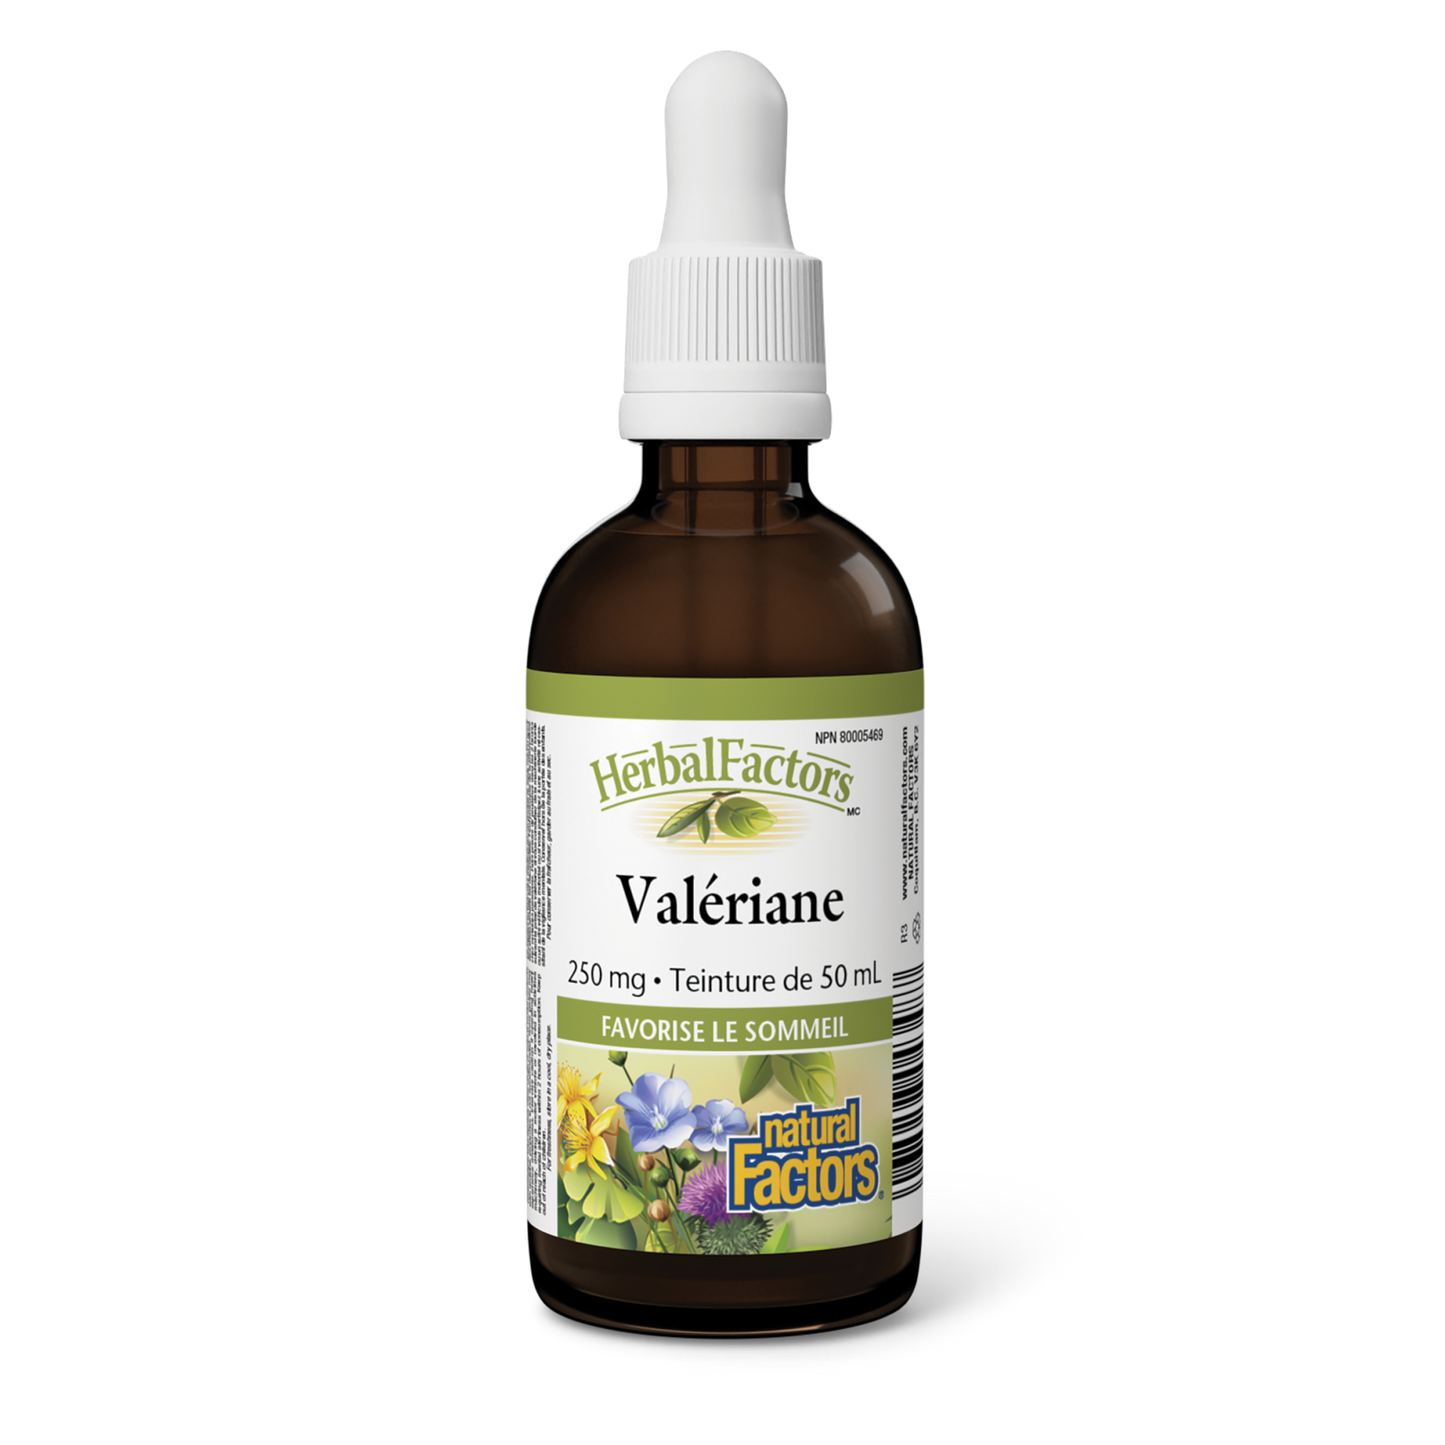 Valériane 250 mg, HerbalFactors, Natural Factors|v|image|4348